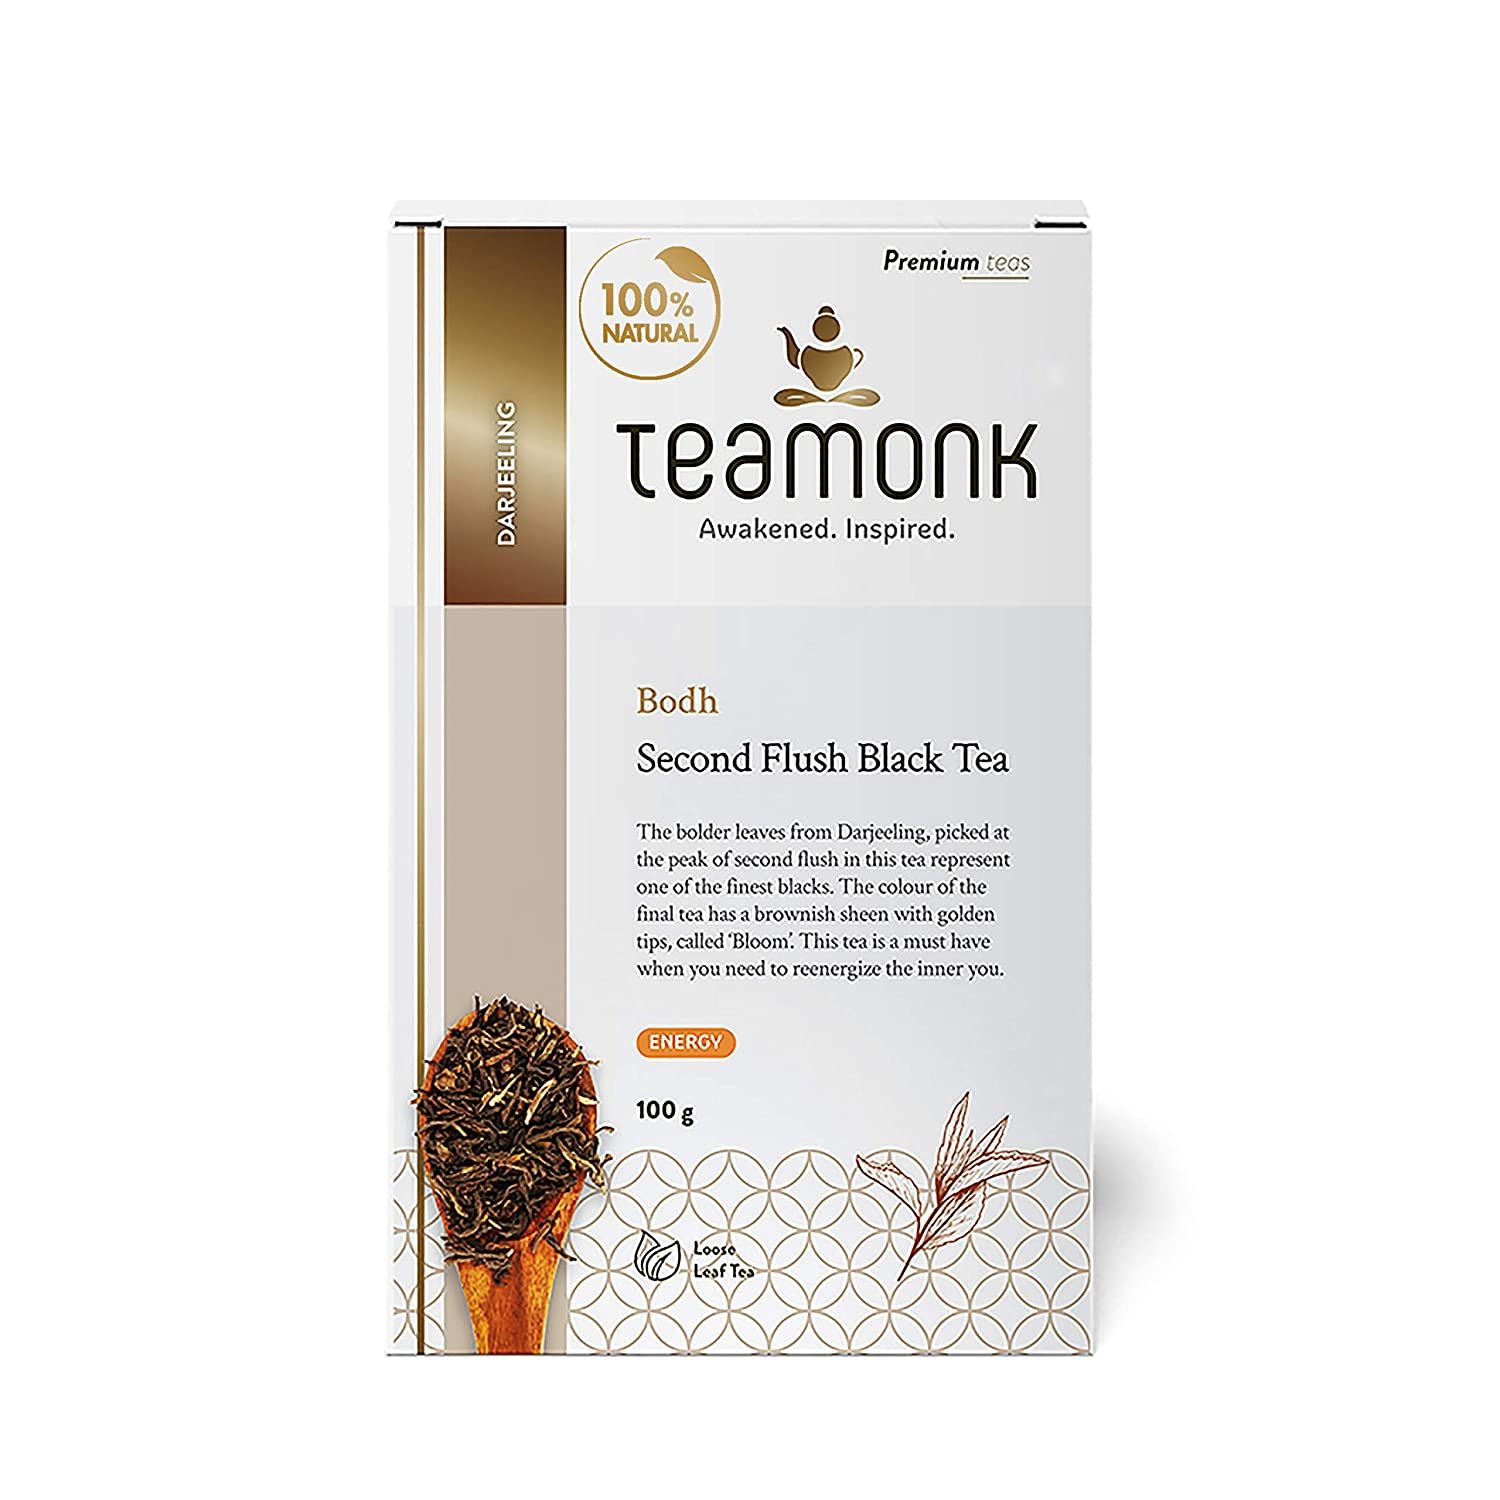 Teamonk Second Flush Black Tea Image